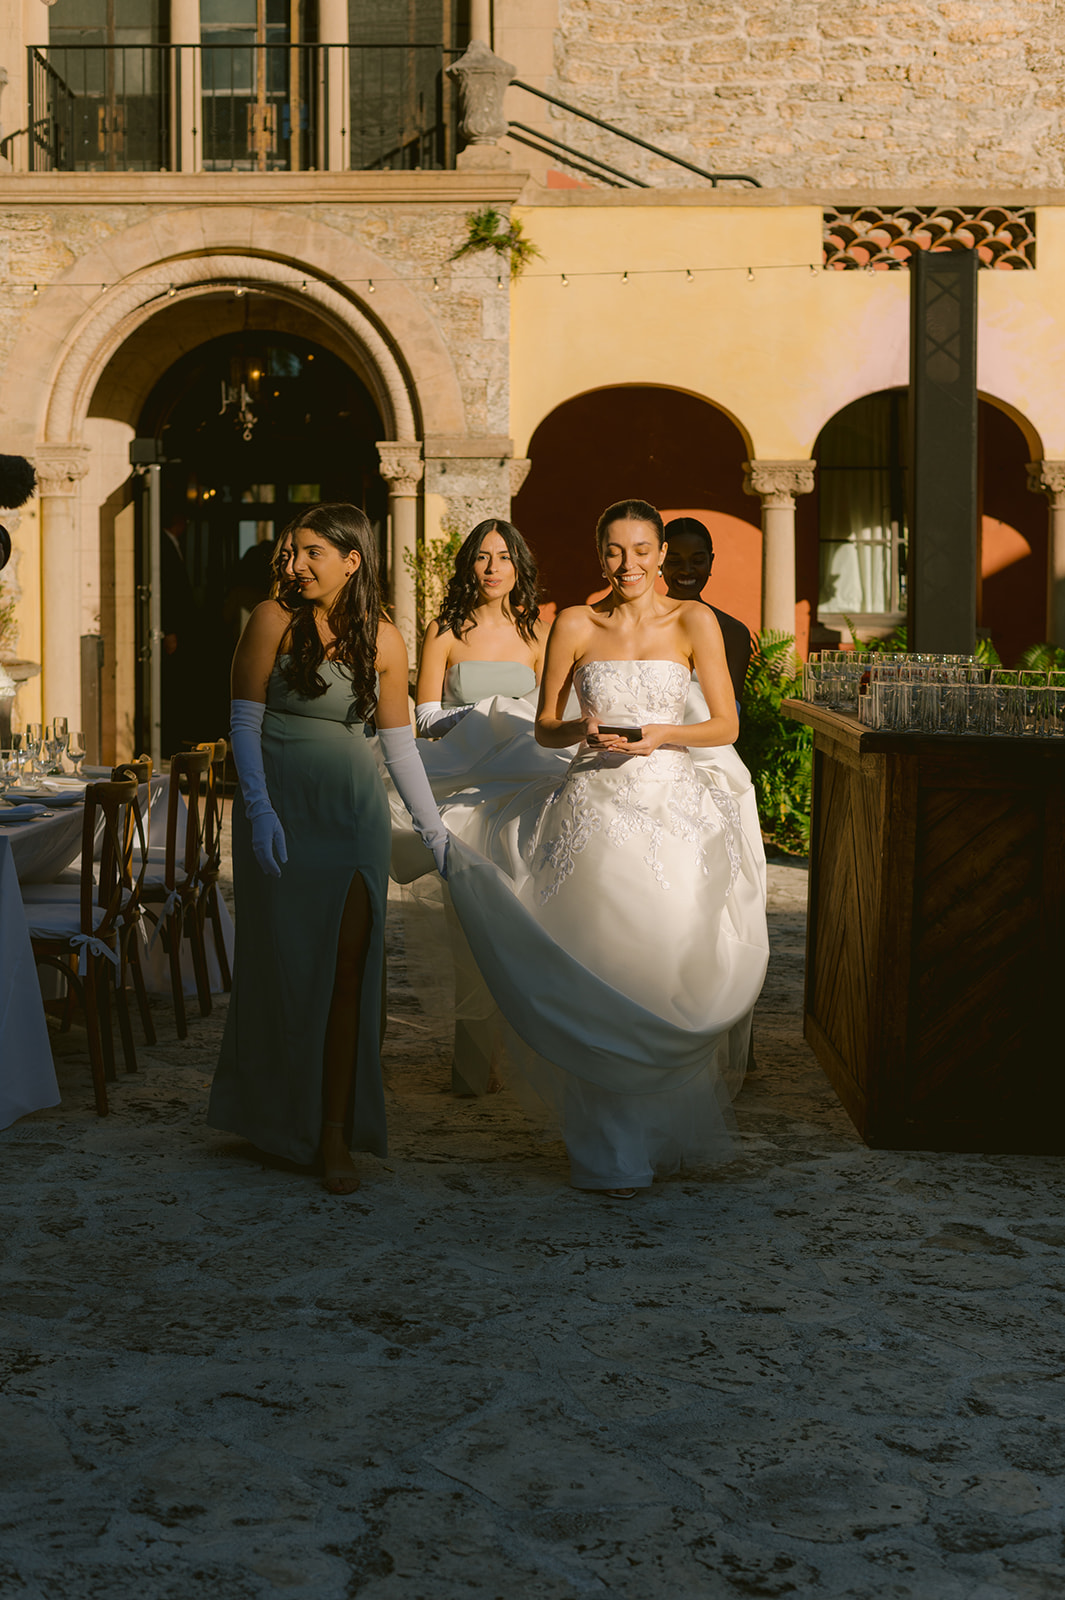 Miami Florida wedding photographers capturing every moment
